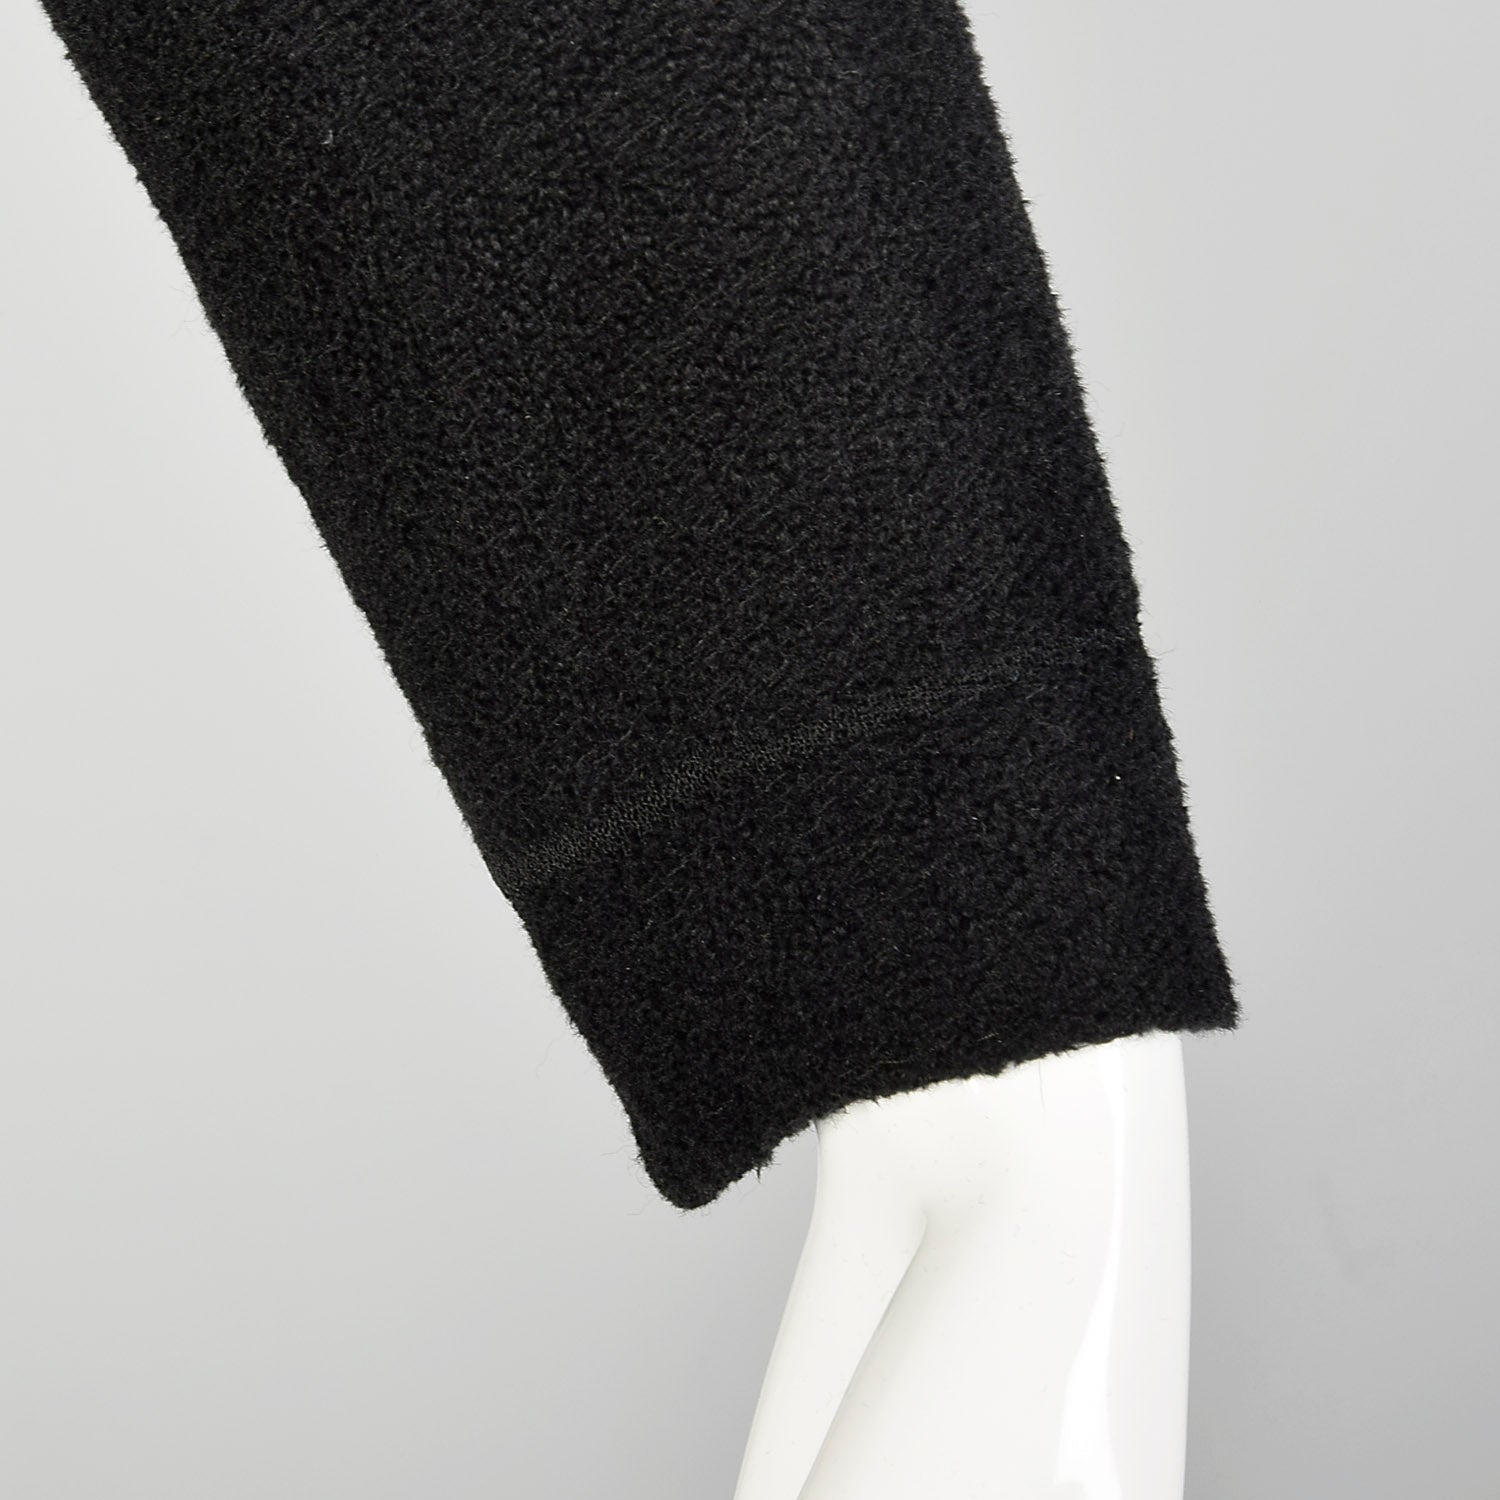 Medium 1930s Swing Coat Long Sleeve Soft Black Patch Pockets Winter